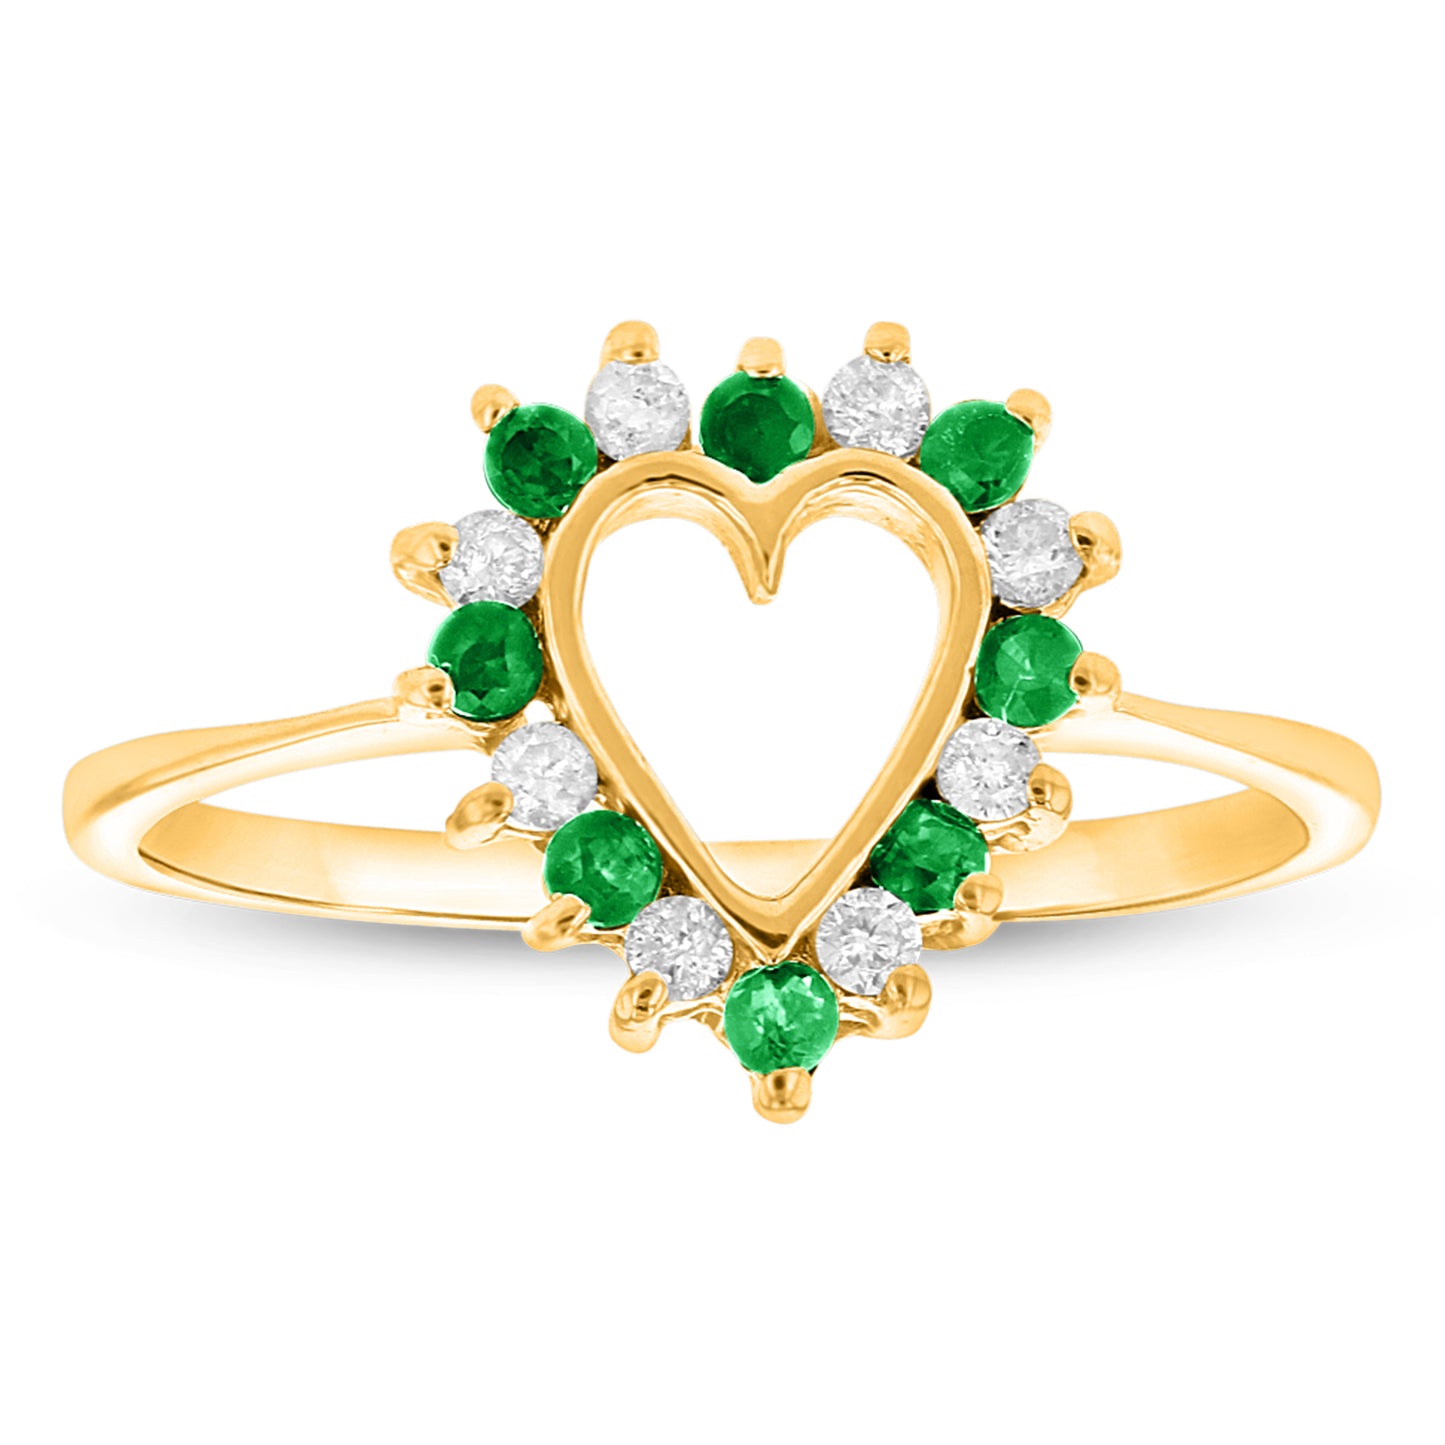 1/4ct Round-Cut Emerald & Diamond Ring in 14k Yellow Gold